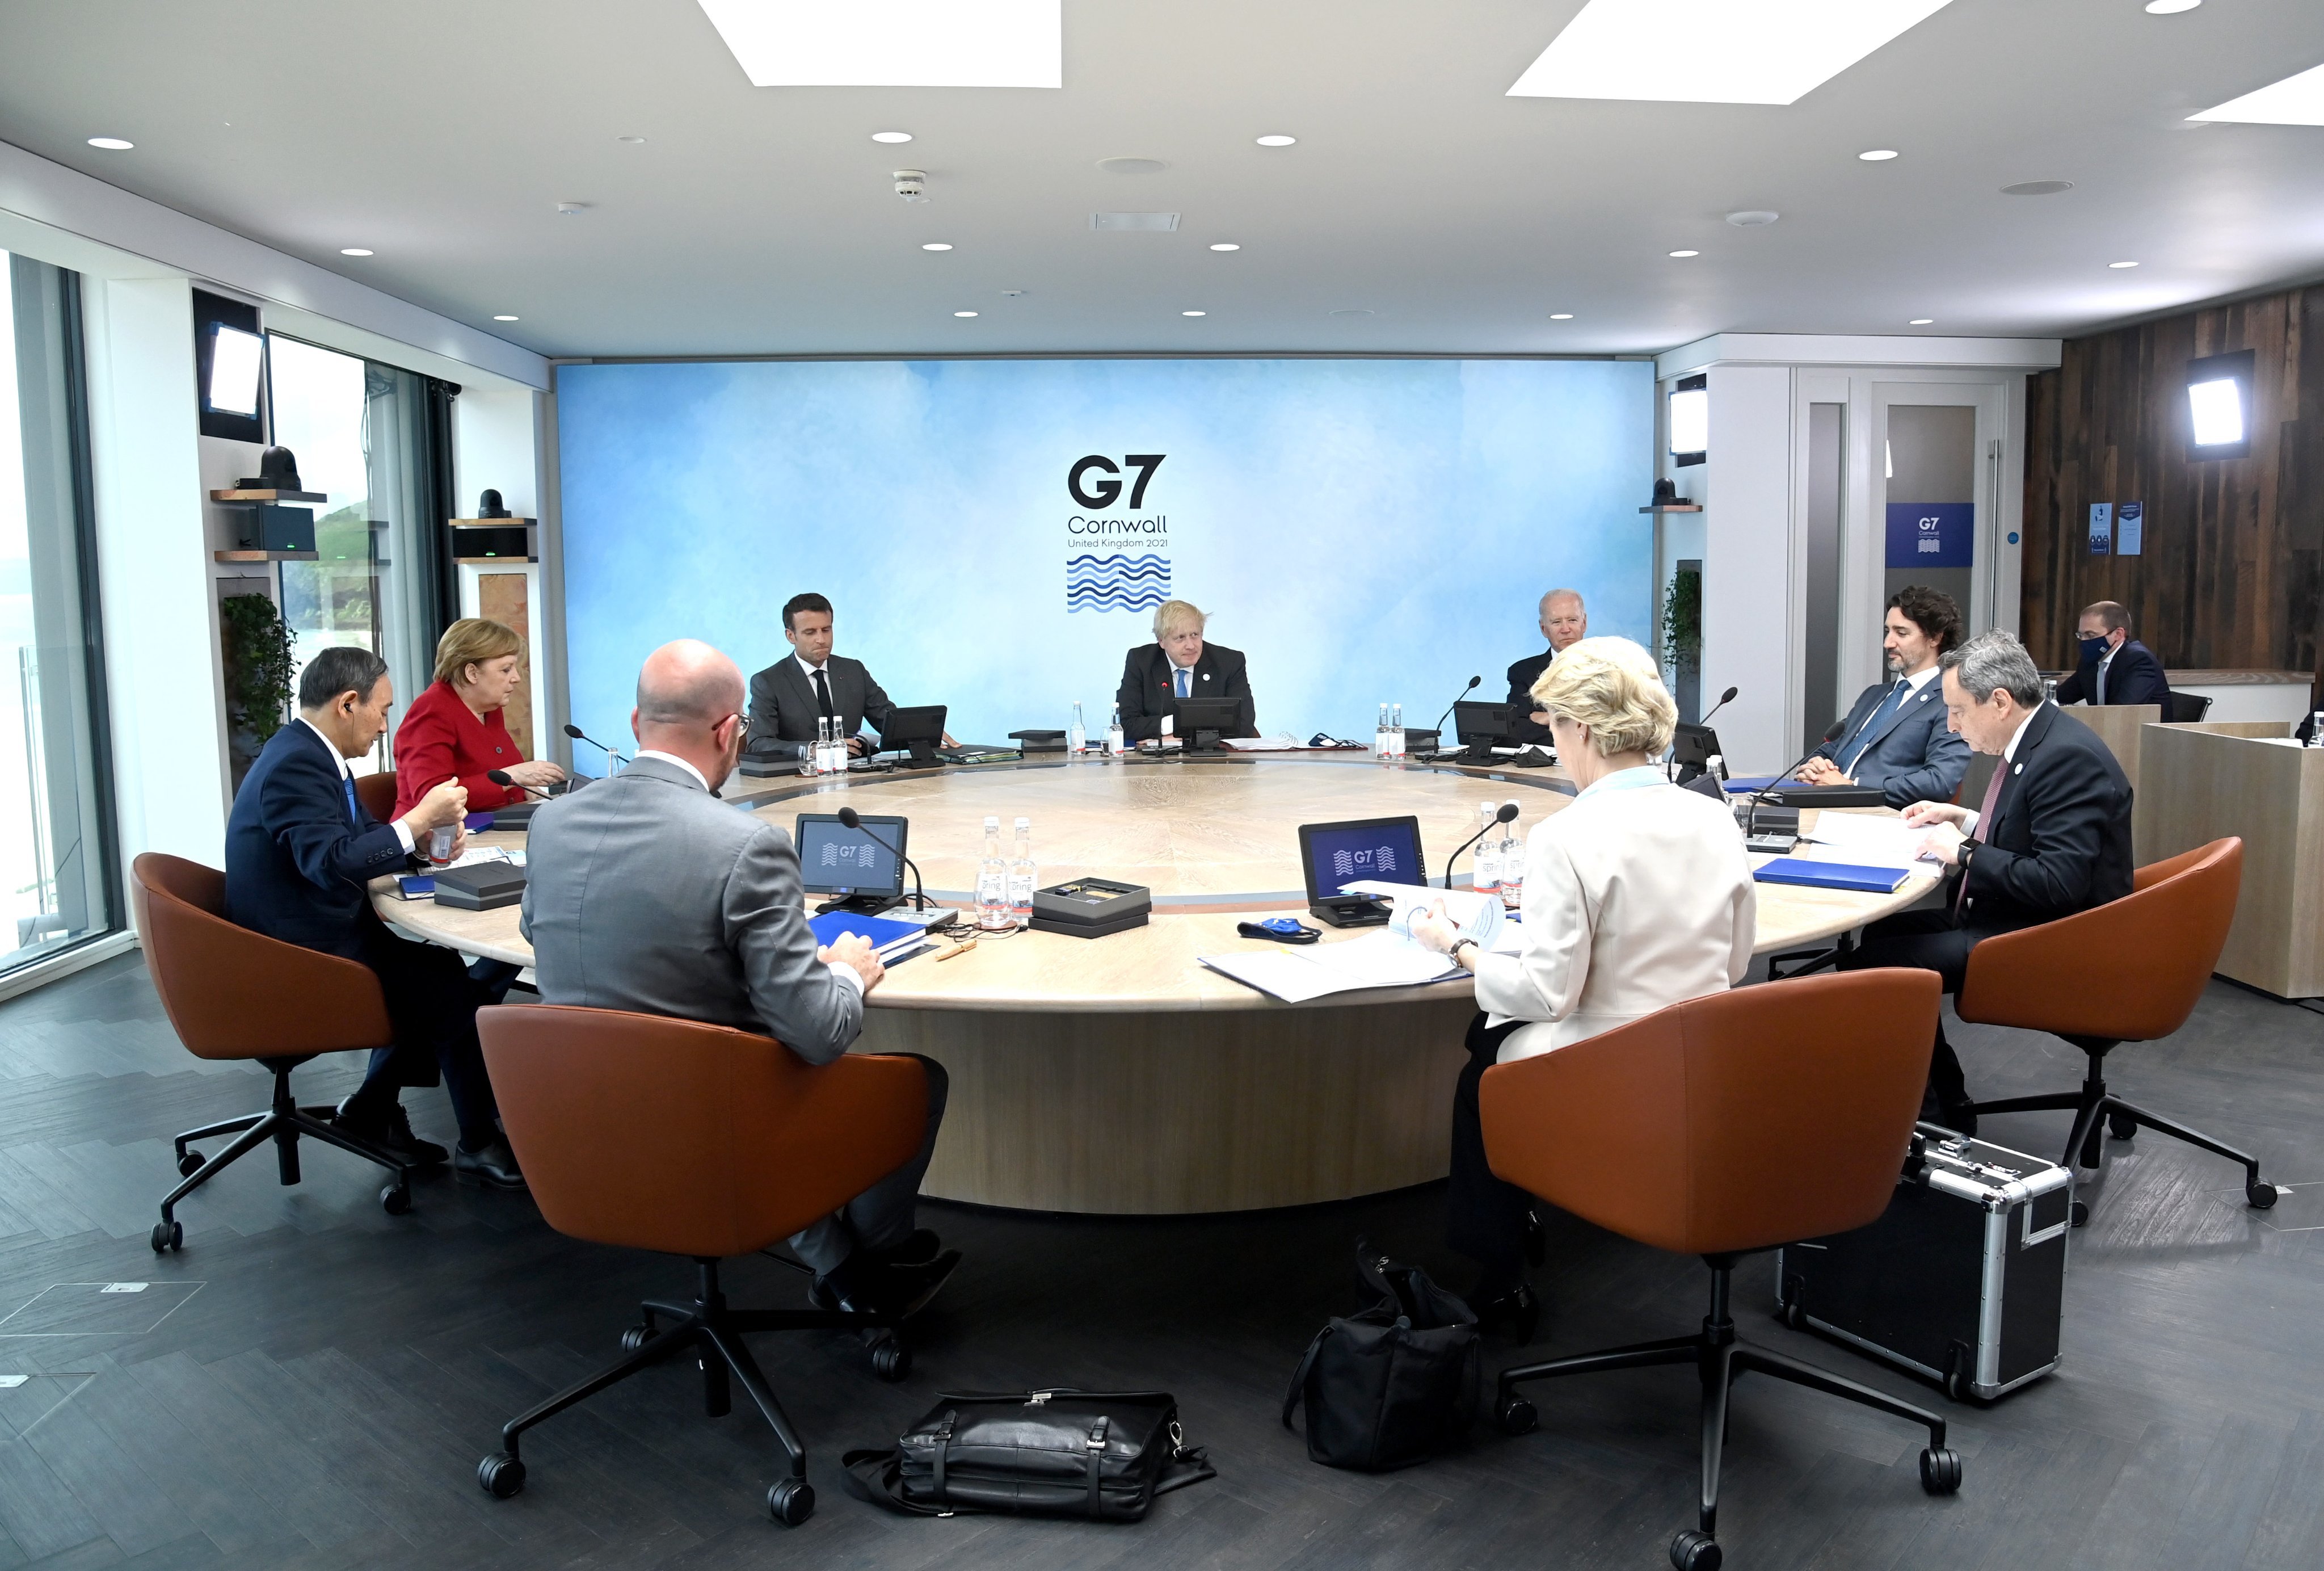 G7 leadersss